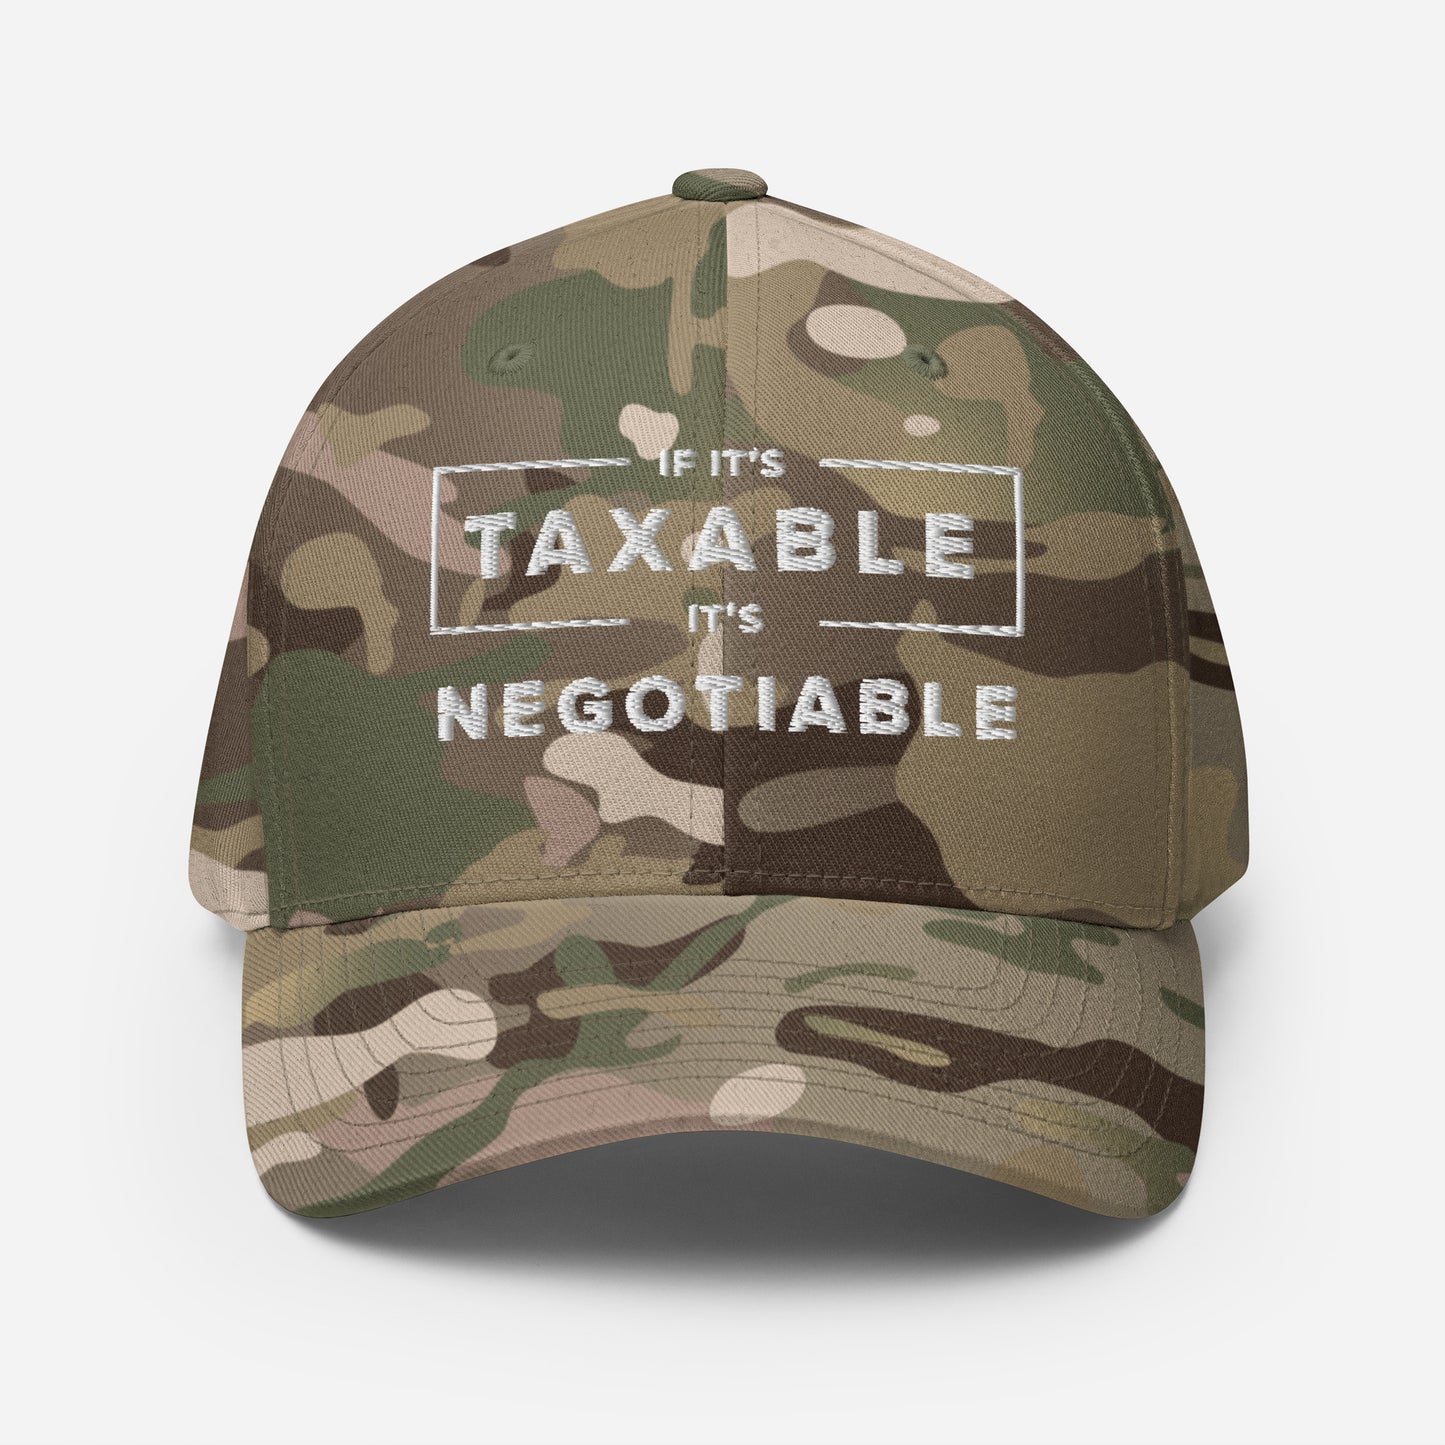 If it's taxable, it's negotiable hat - original - light